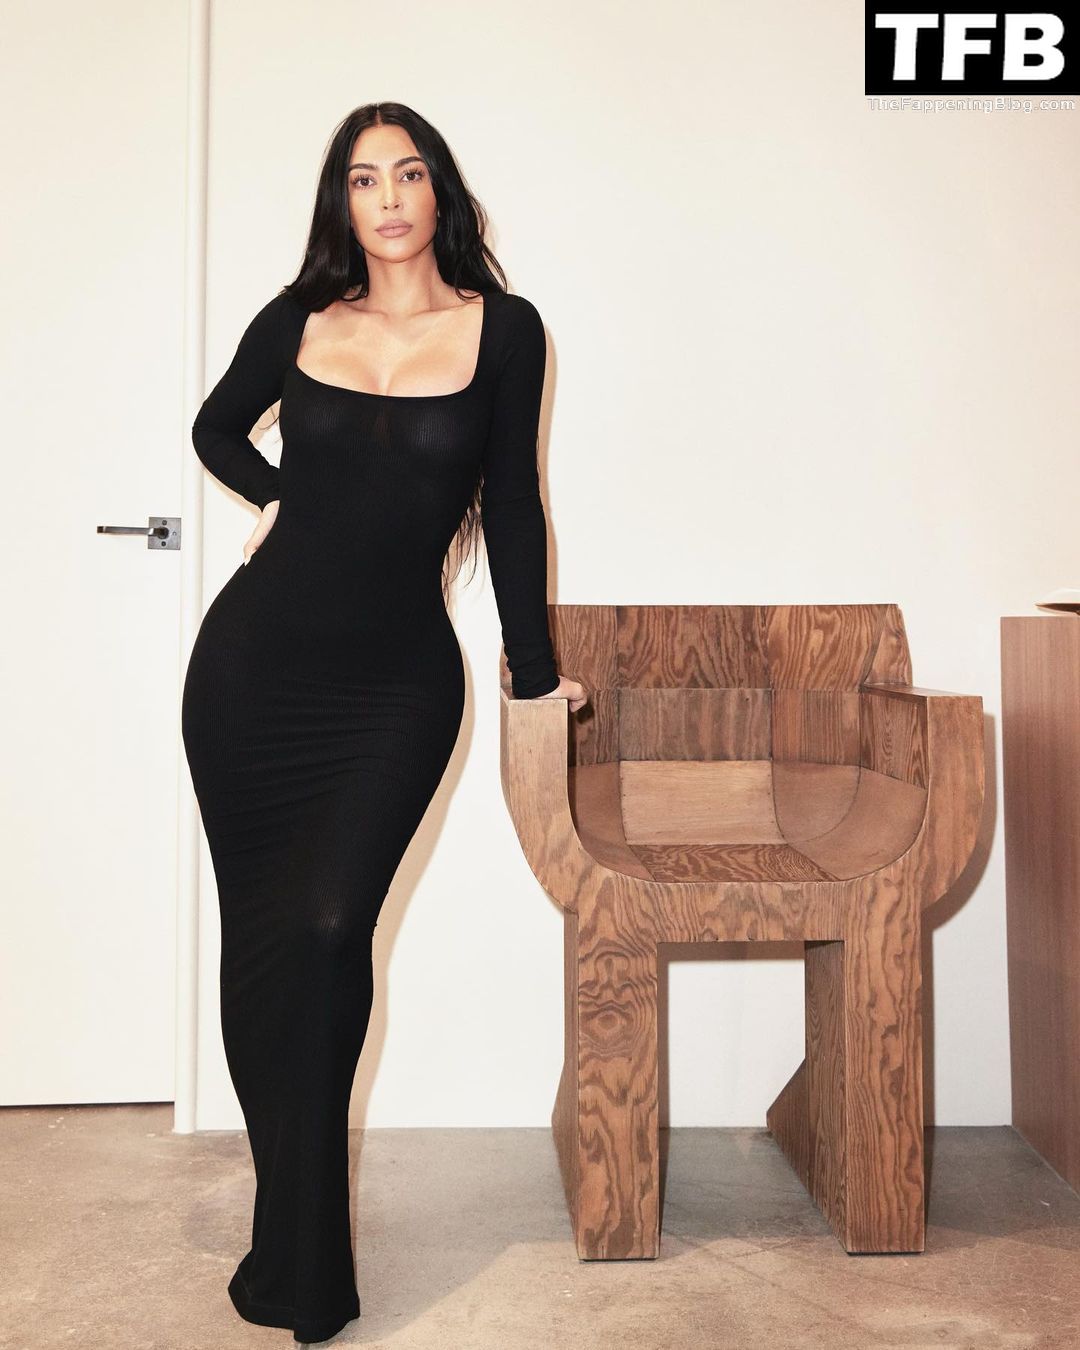 Kim-Kardashian-Tits-The-Fappening-Blog-3.jpg